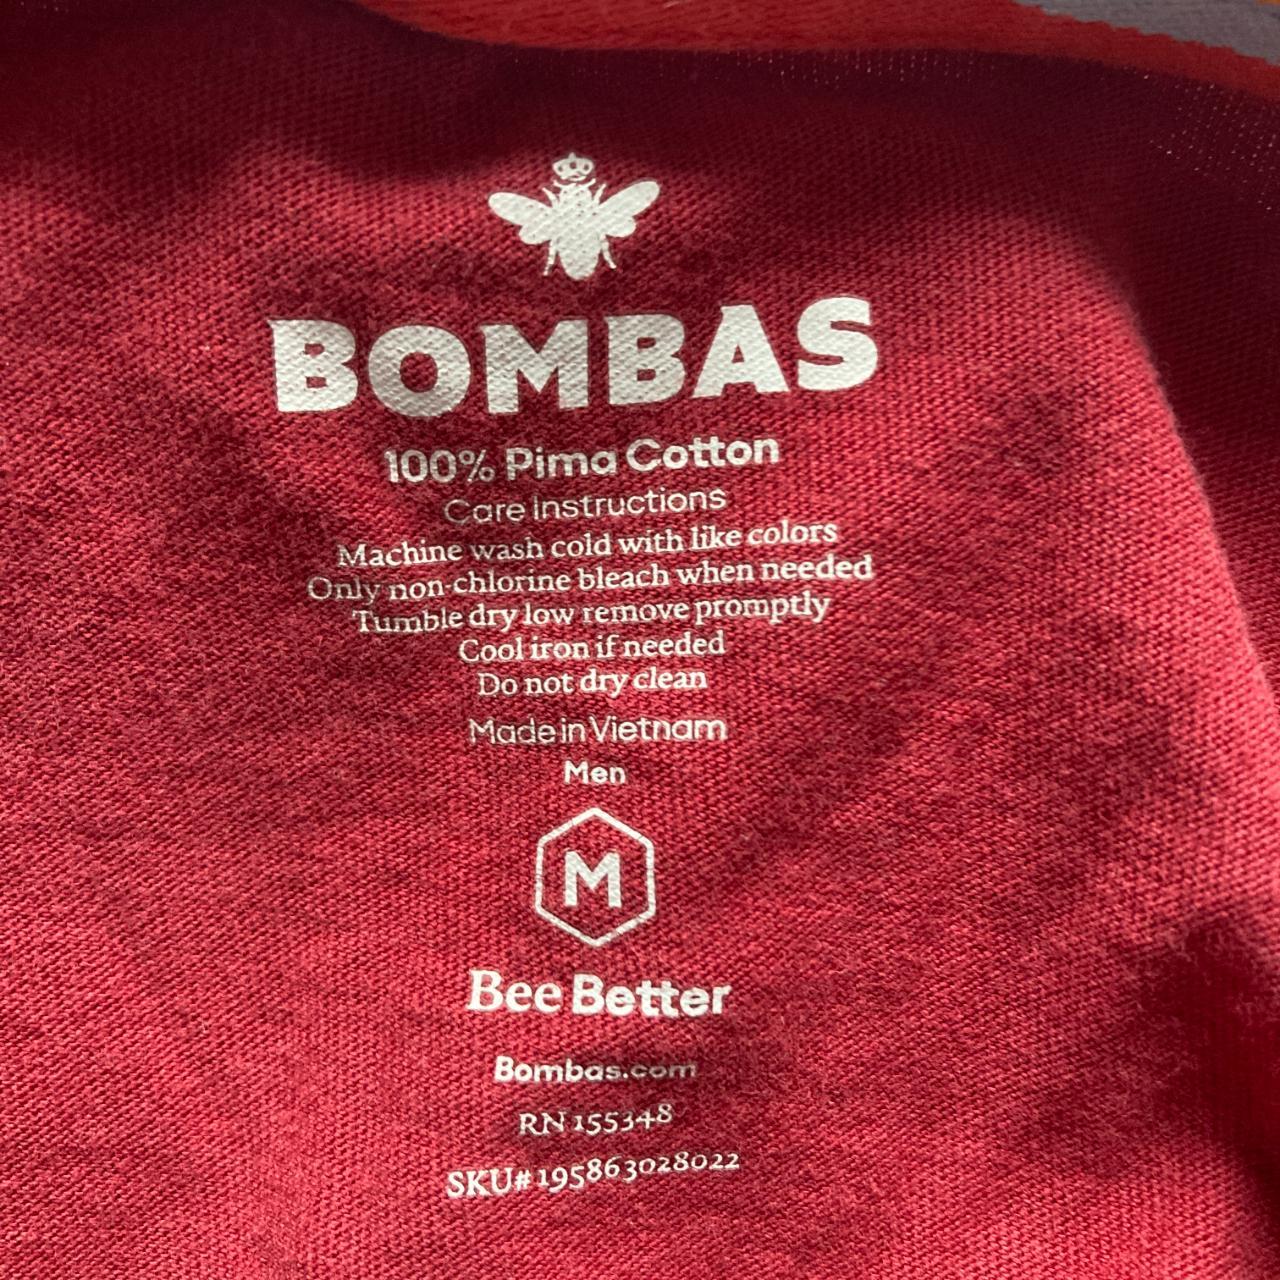 Bombas Men's Red T-shirt (3)